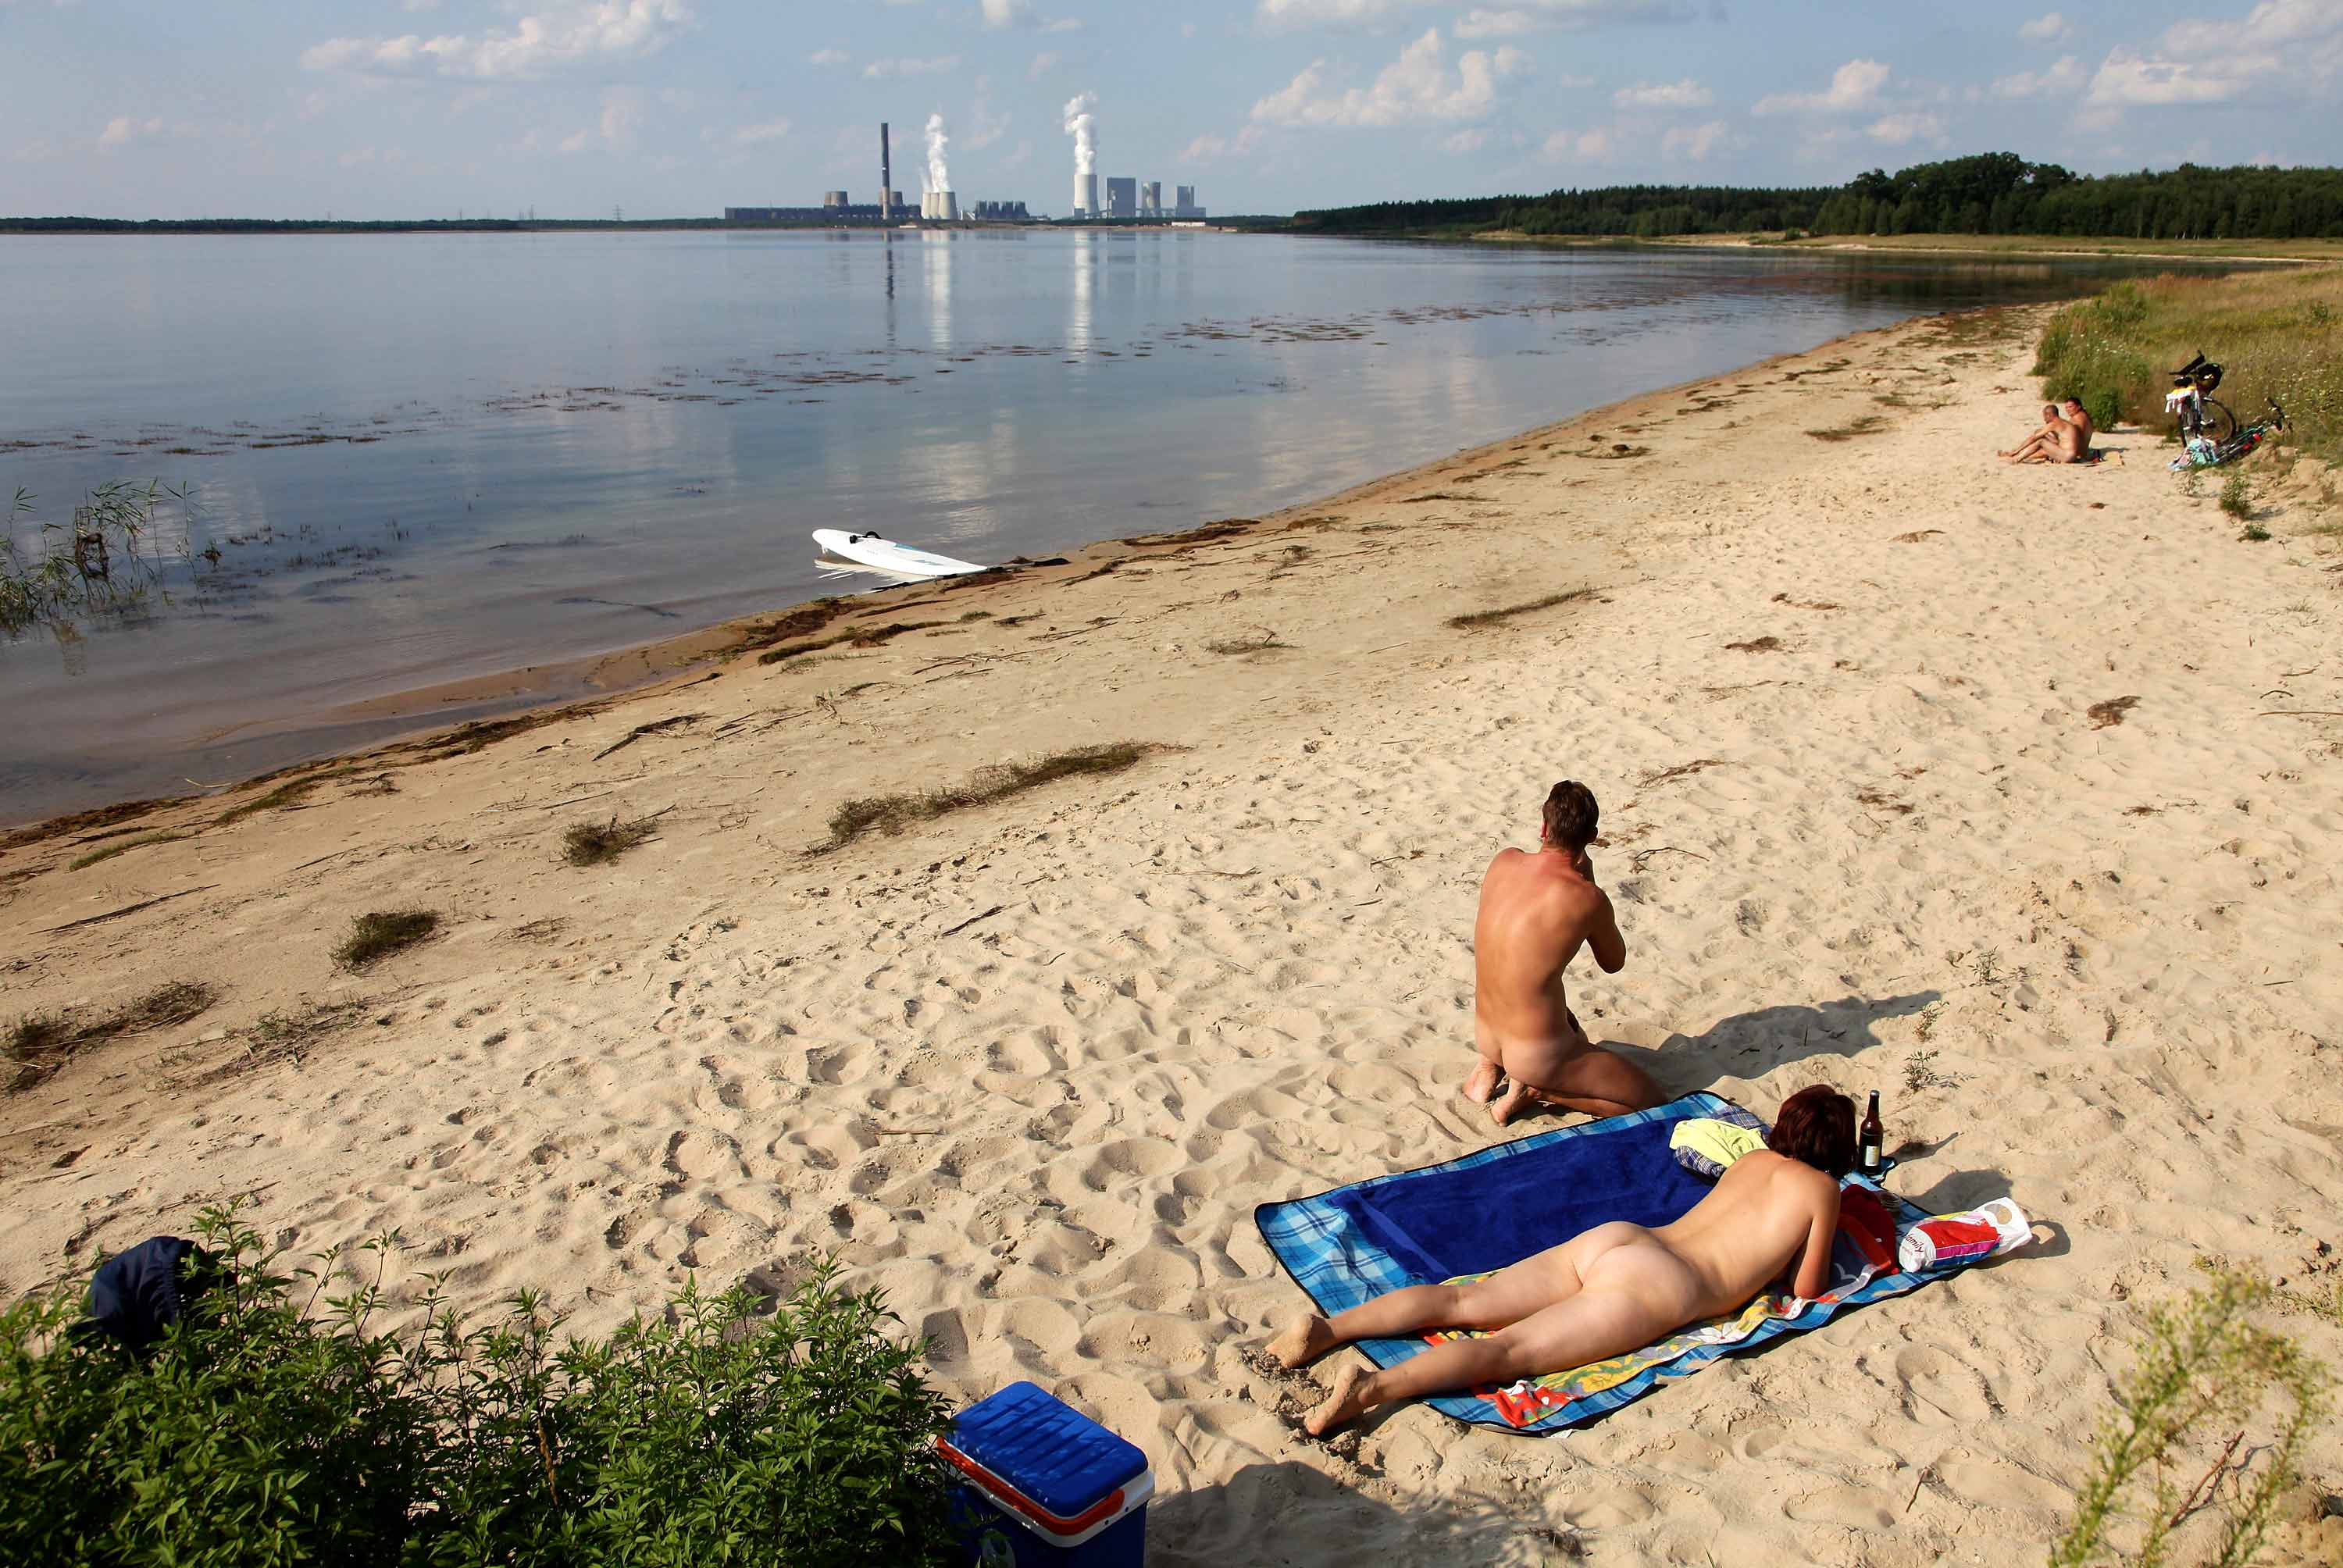 Vintage Nudist Beach Sex - Nudity in Germany: The naked truth is revealed | CNN